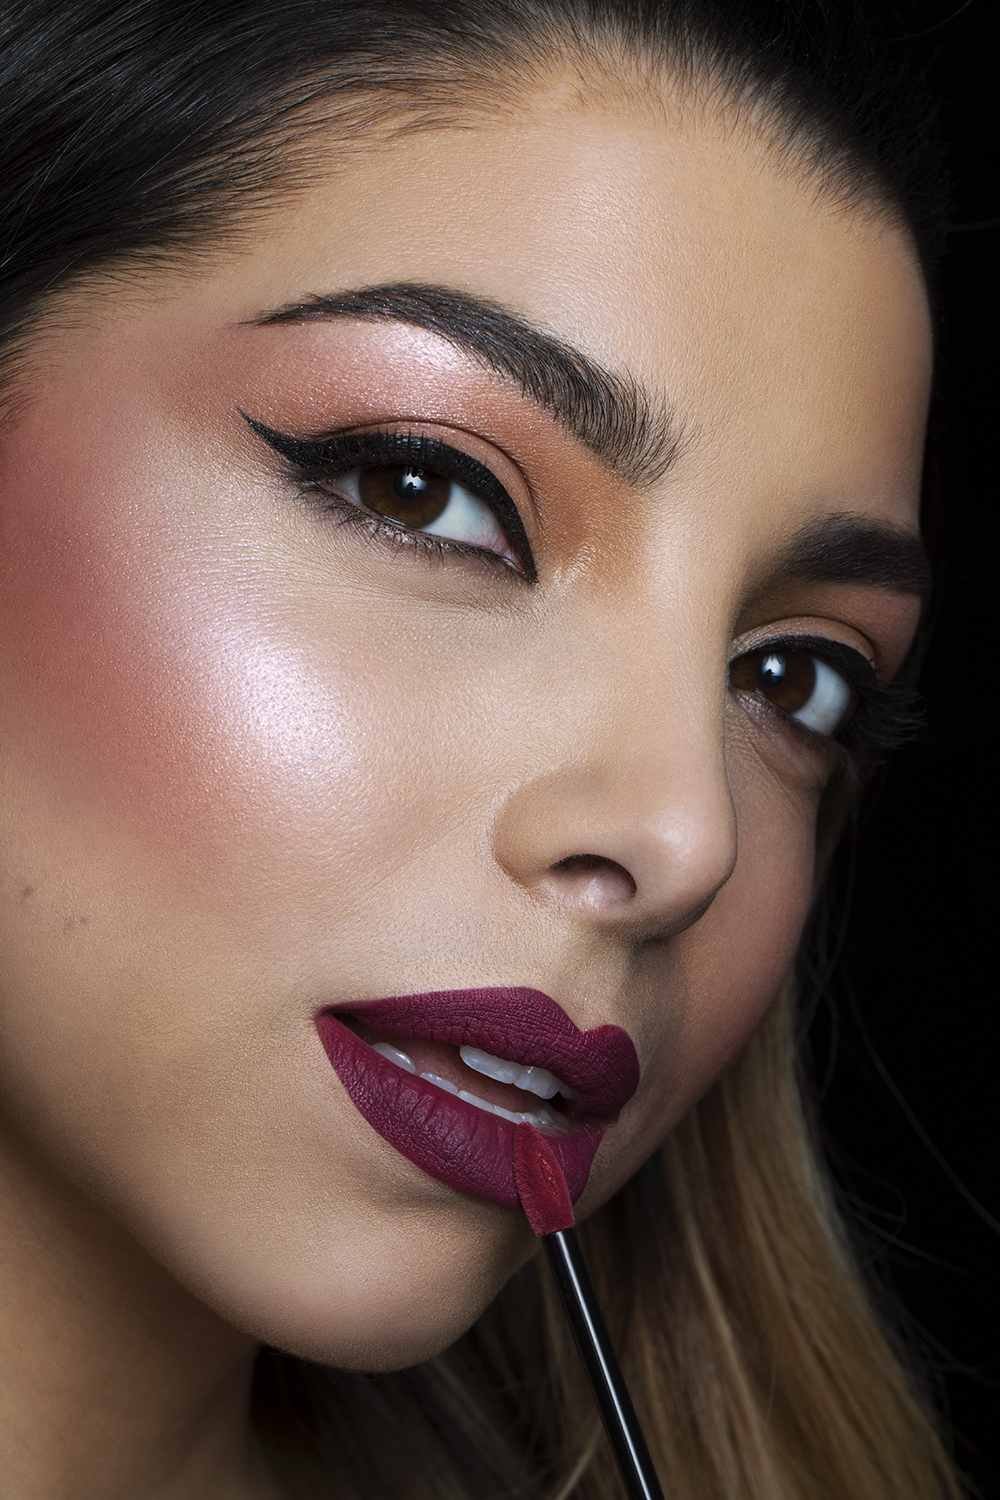 Model putting on lipstick